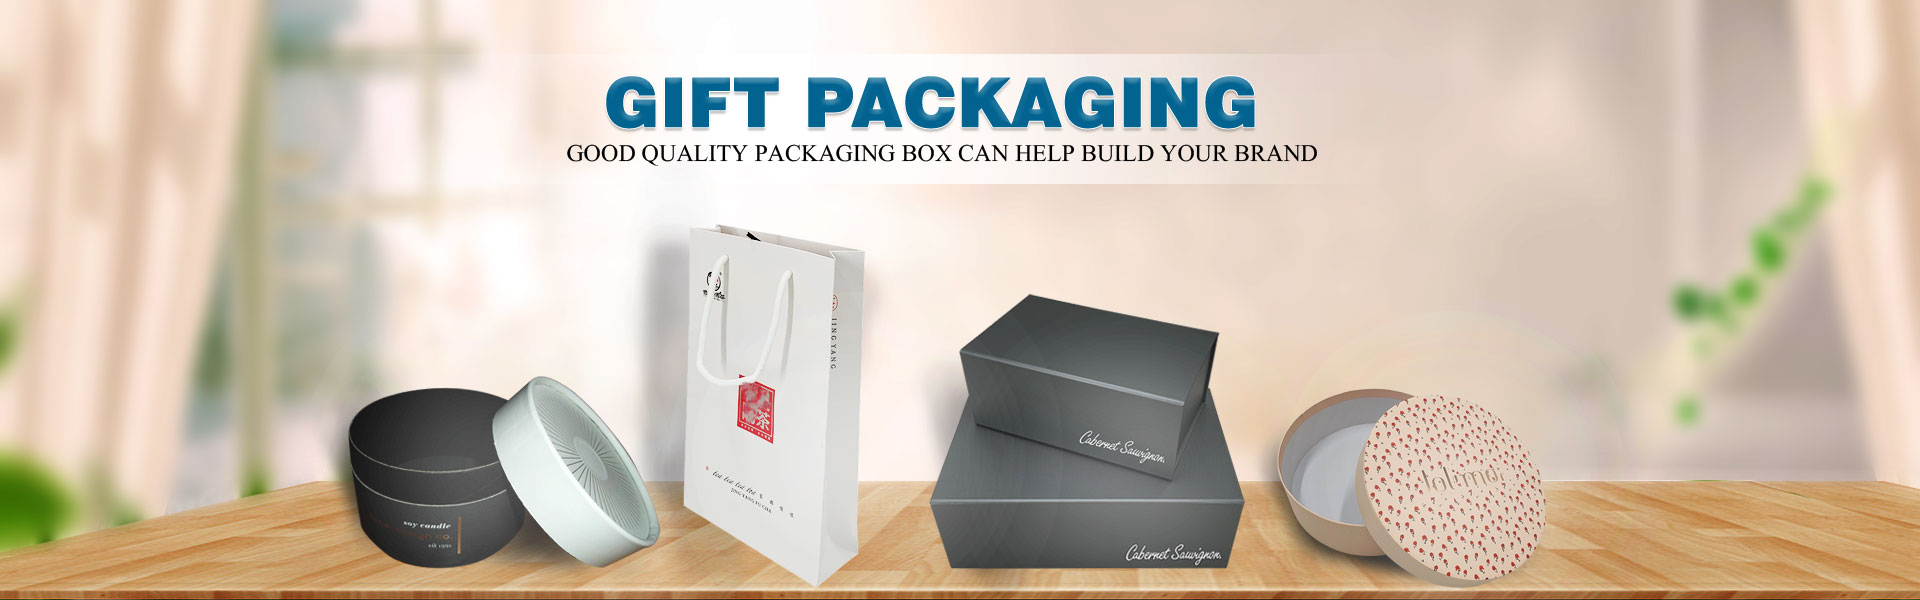 papieren doos, cadeaudoos, cake plank,Dongguan Yisheng Packaging Co., Ltd